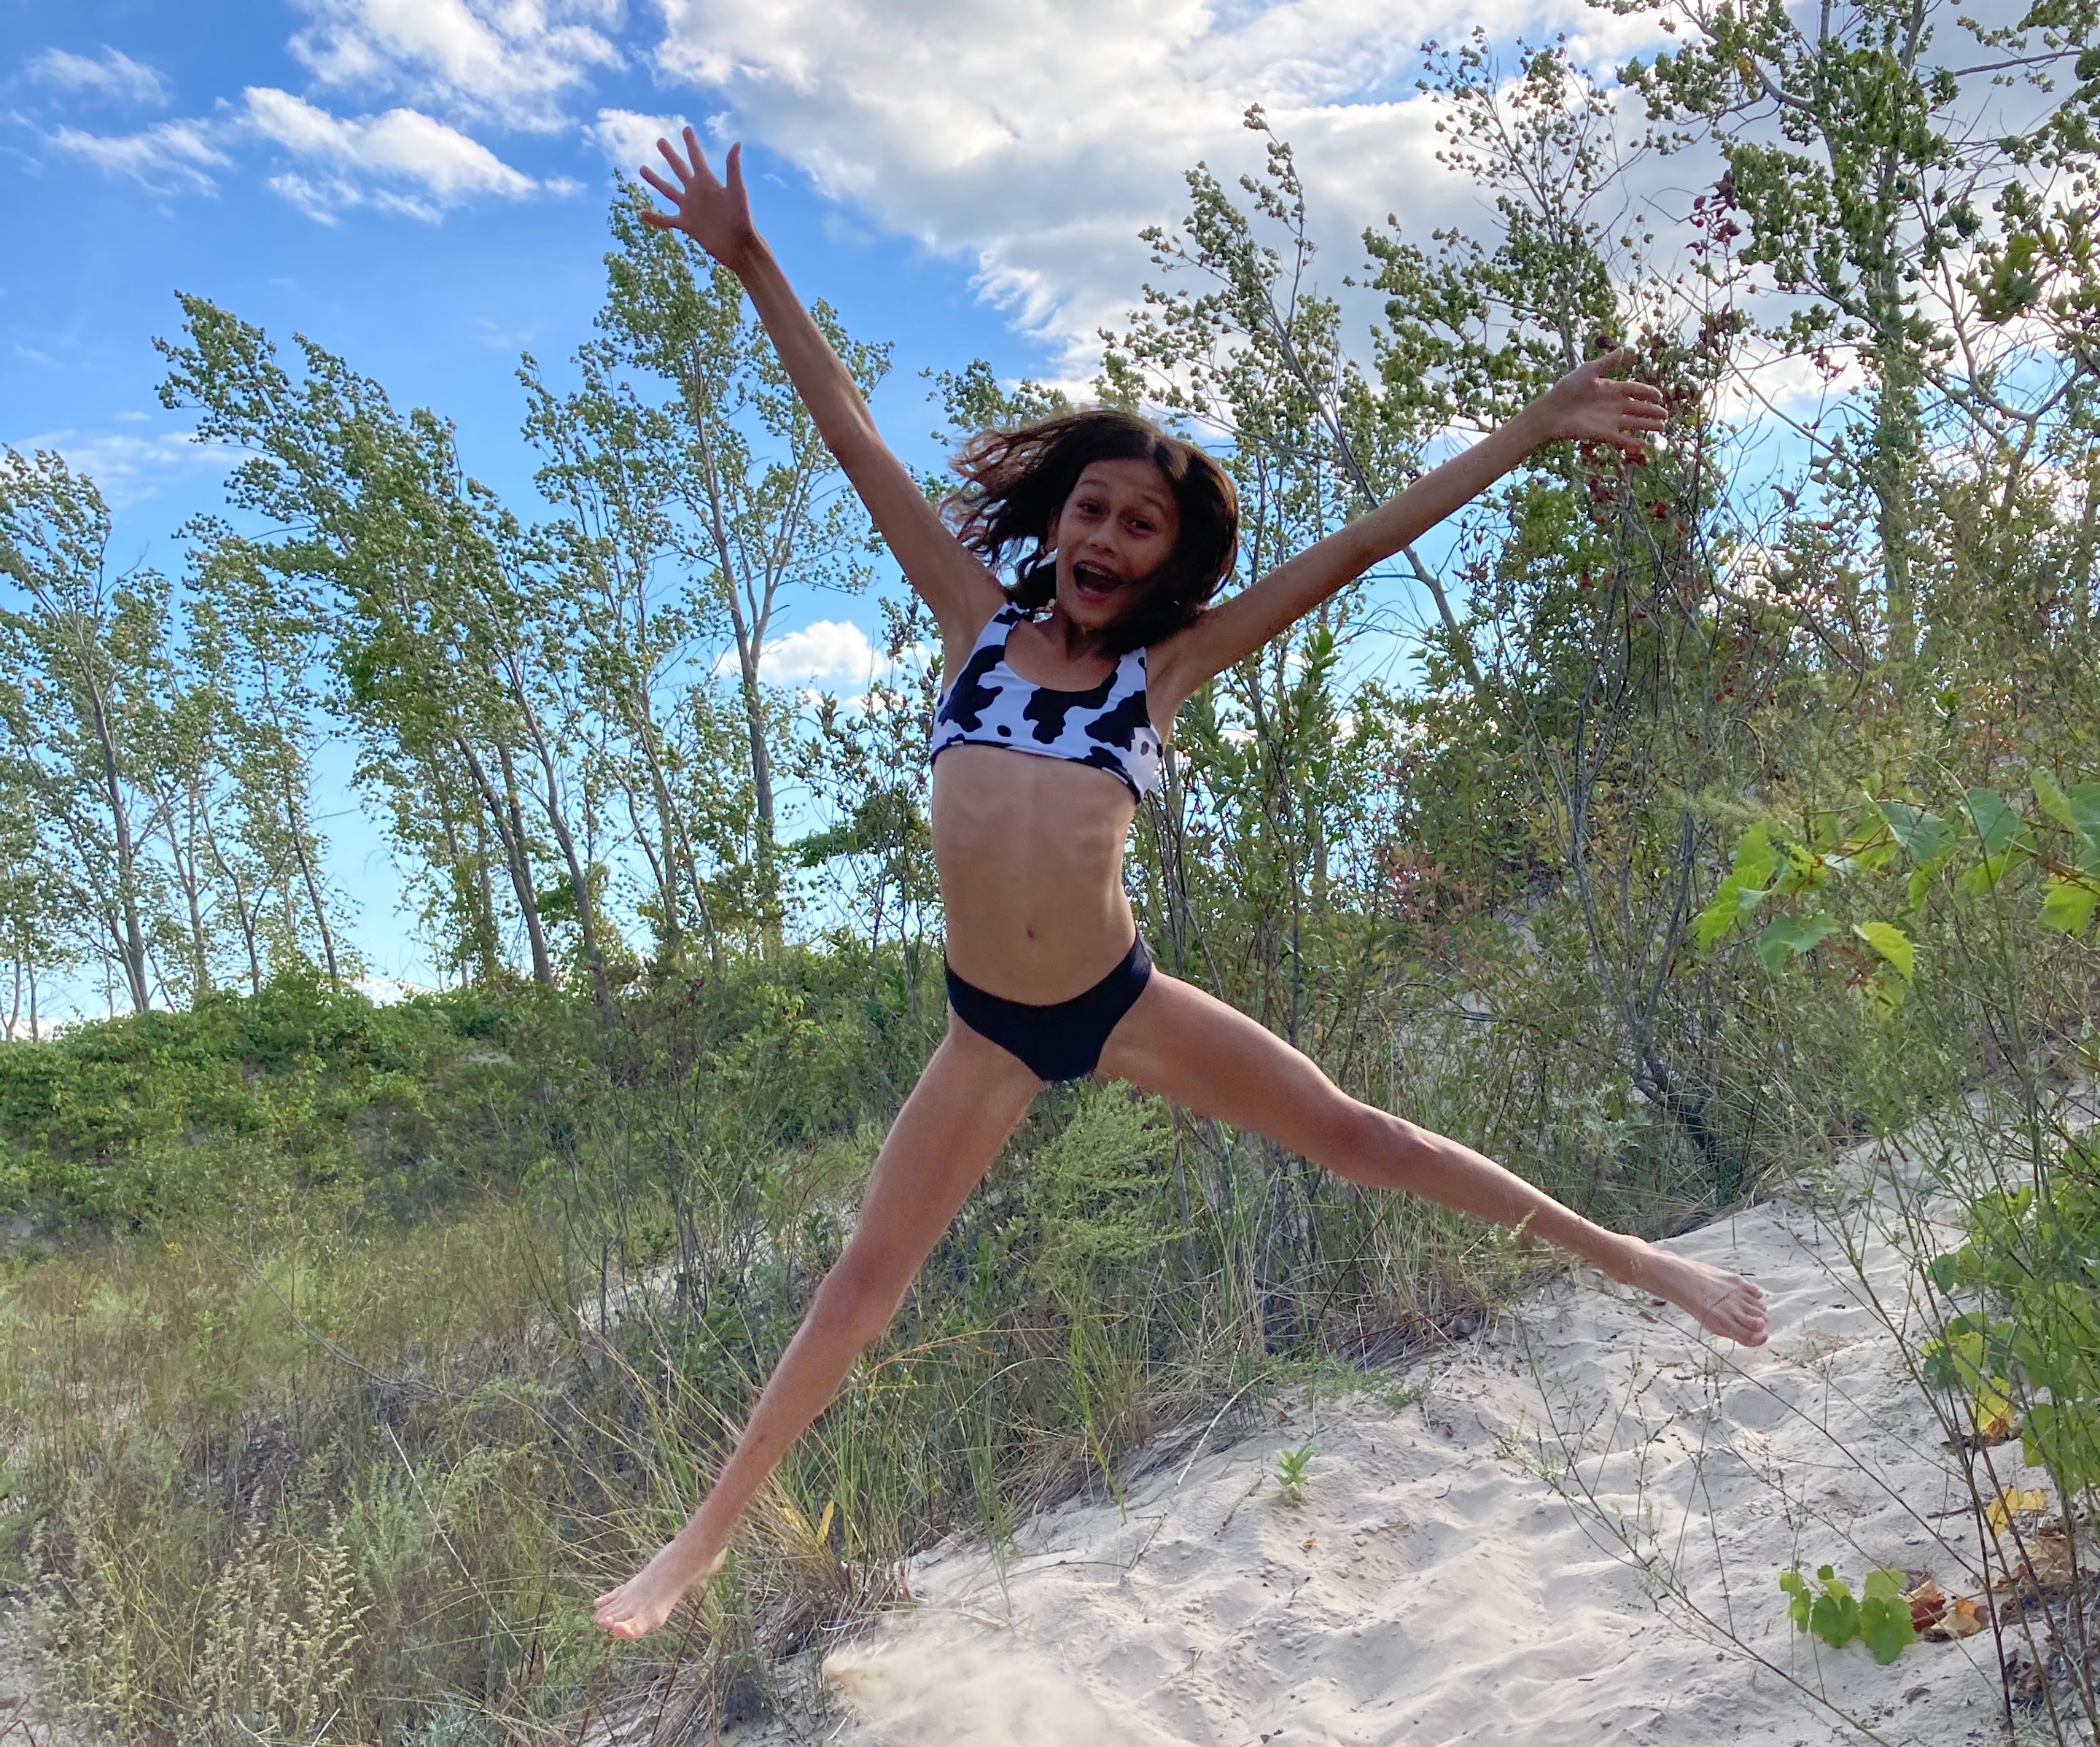 young girl in a bikini jumping in grassy sand dune